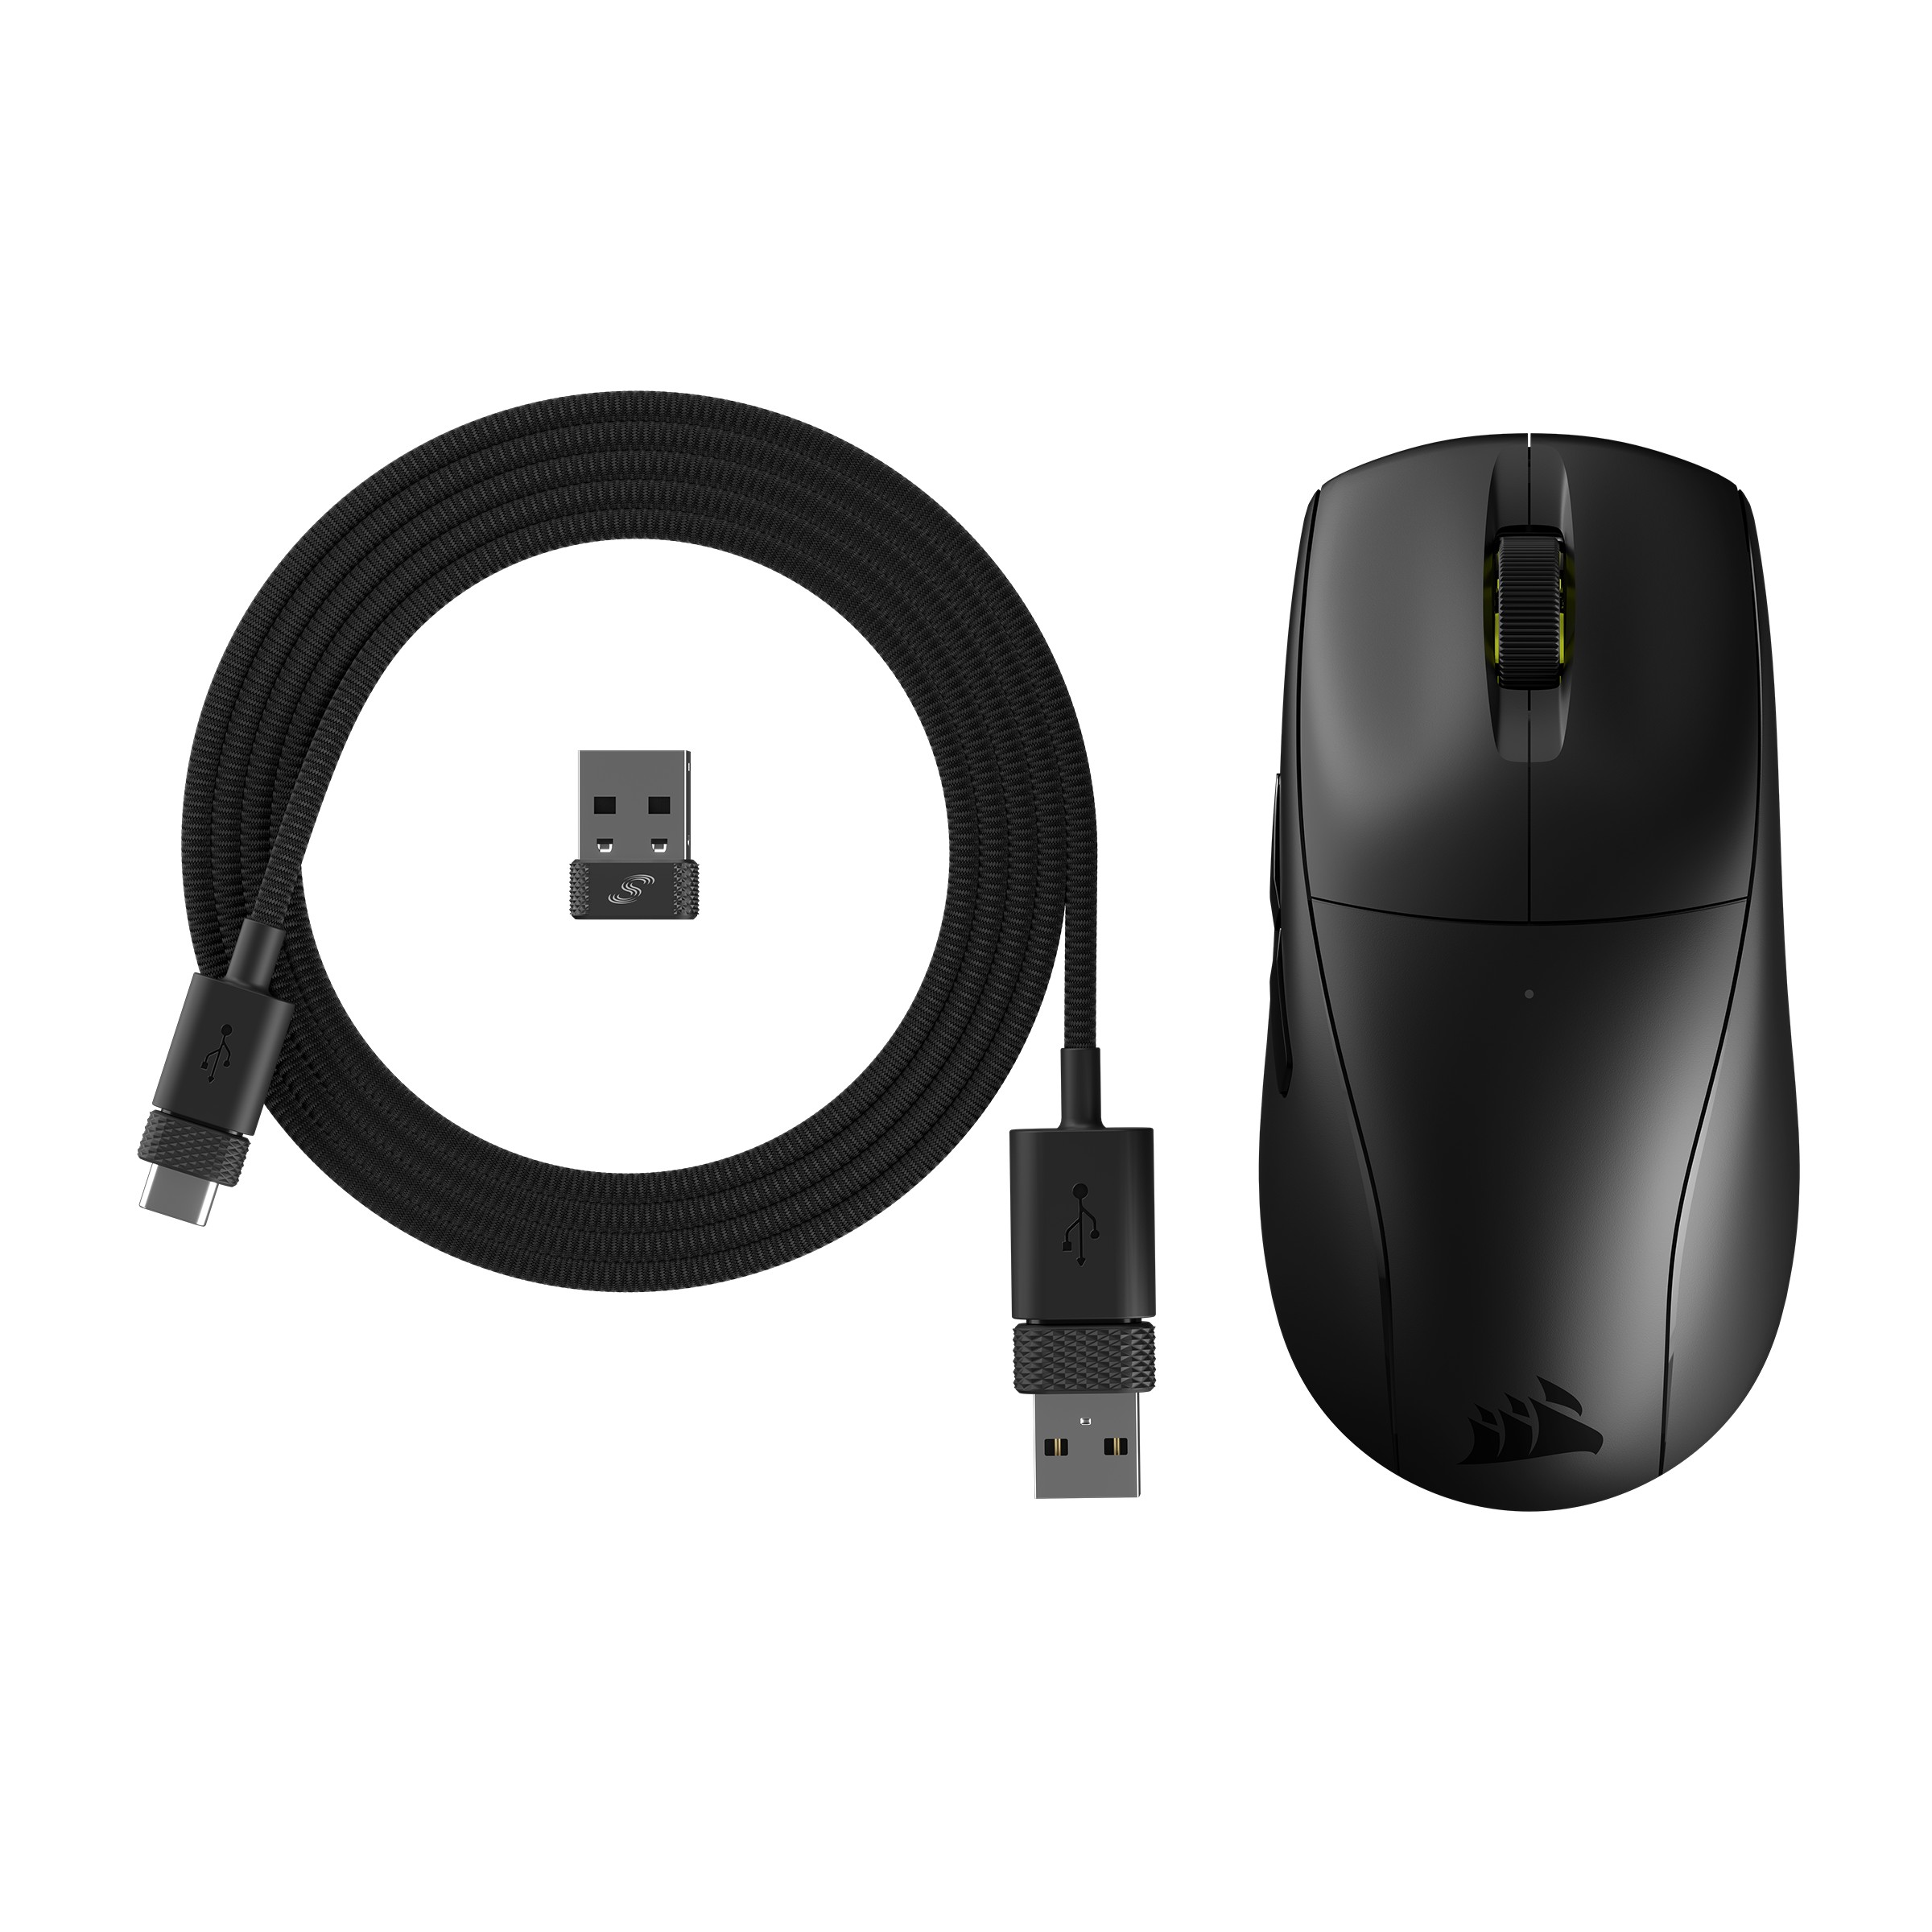 CORSAIR - CORSAIR M75 AIR WIRELESS Ultra-Lightweight Gaming Mouse – Black